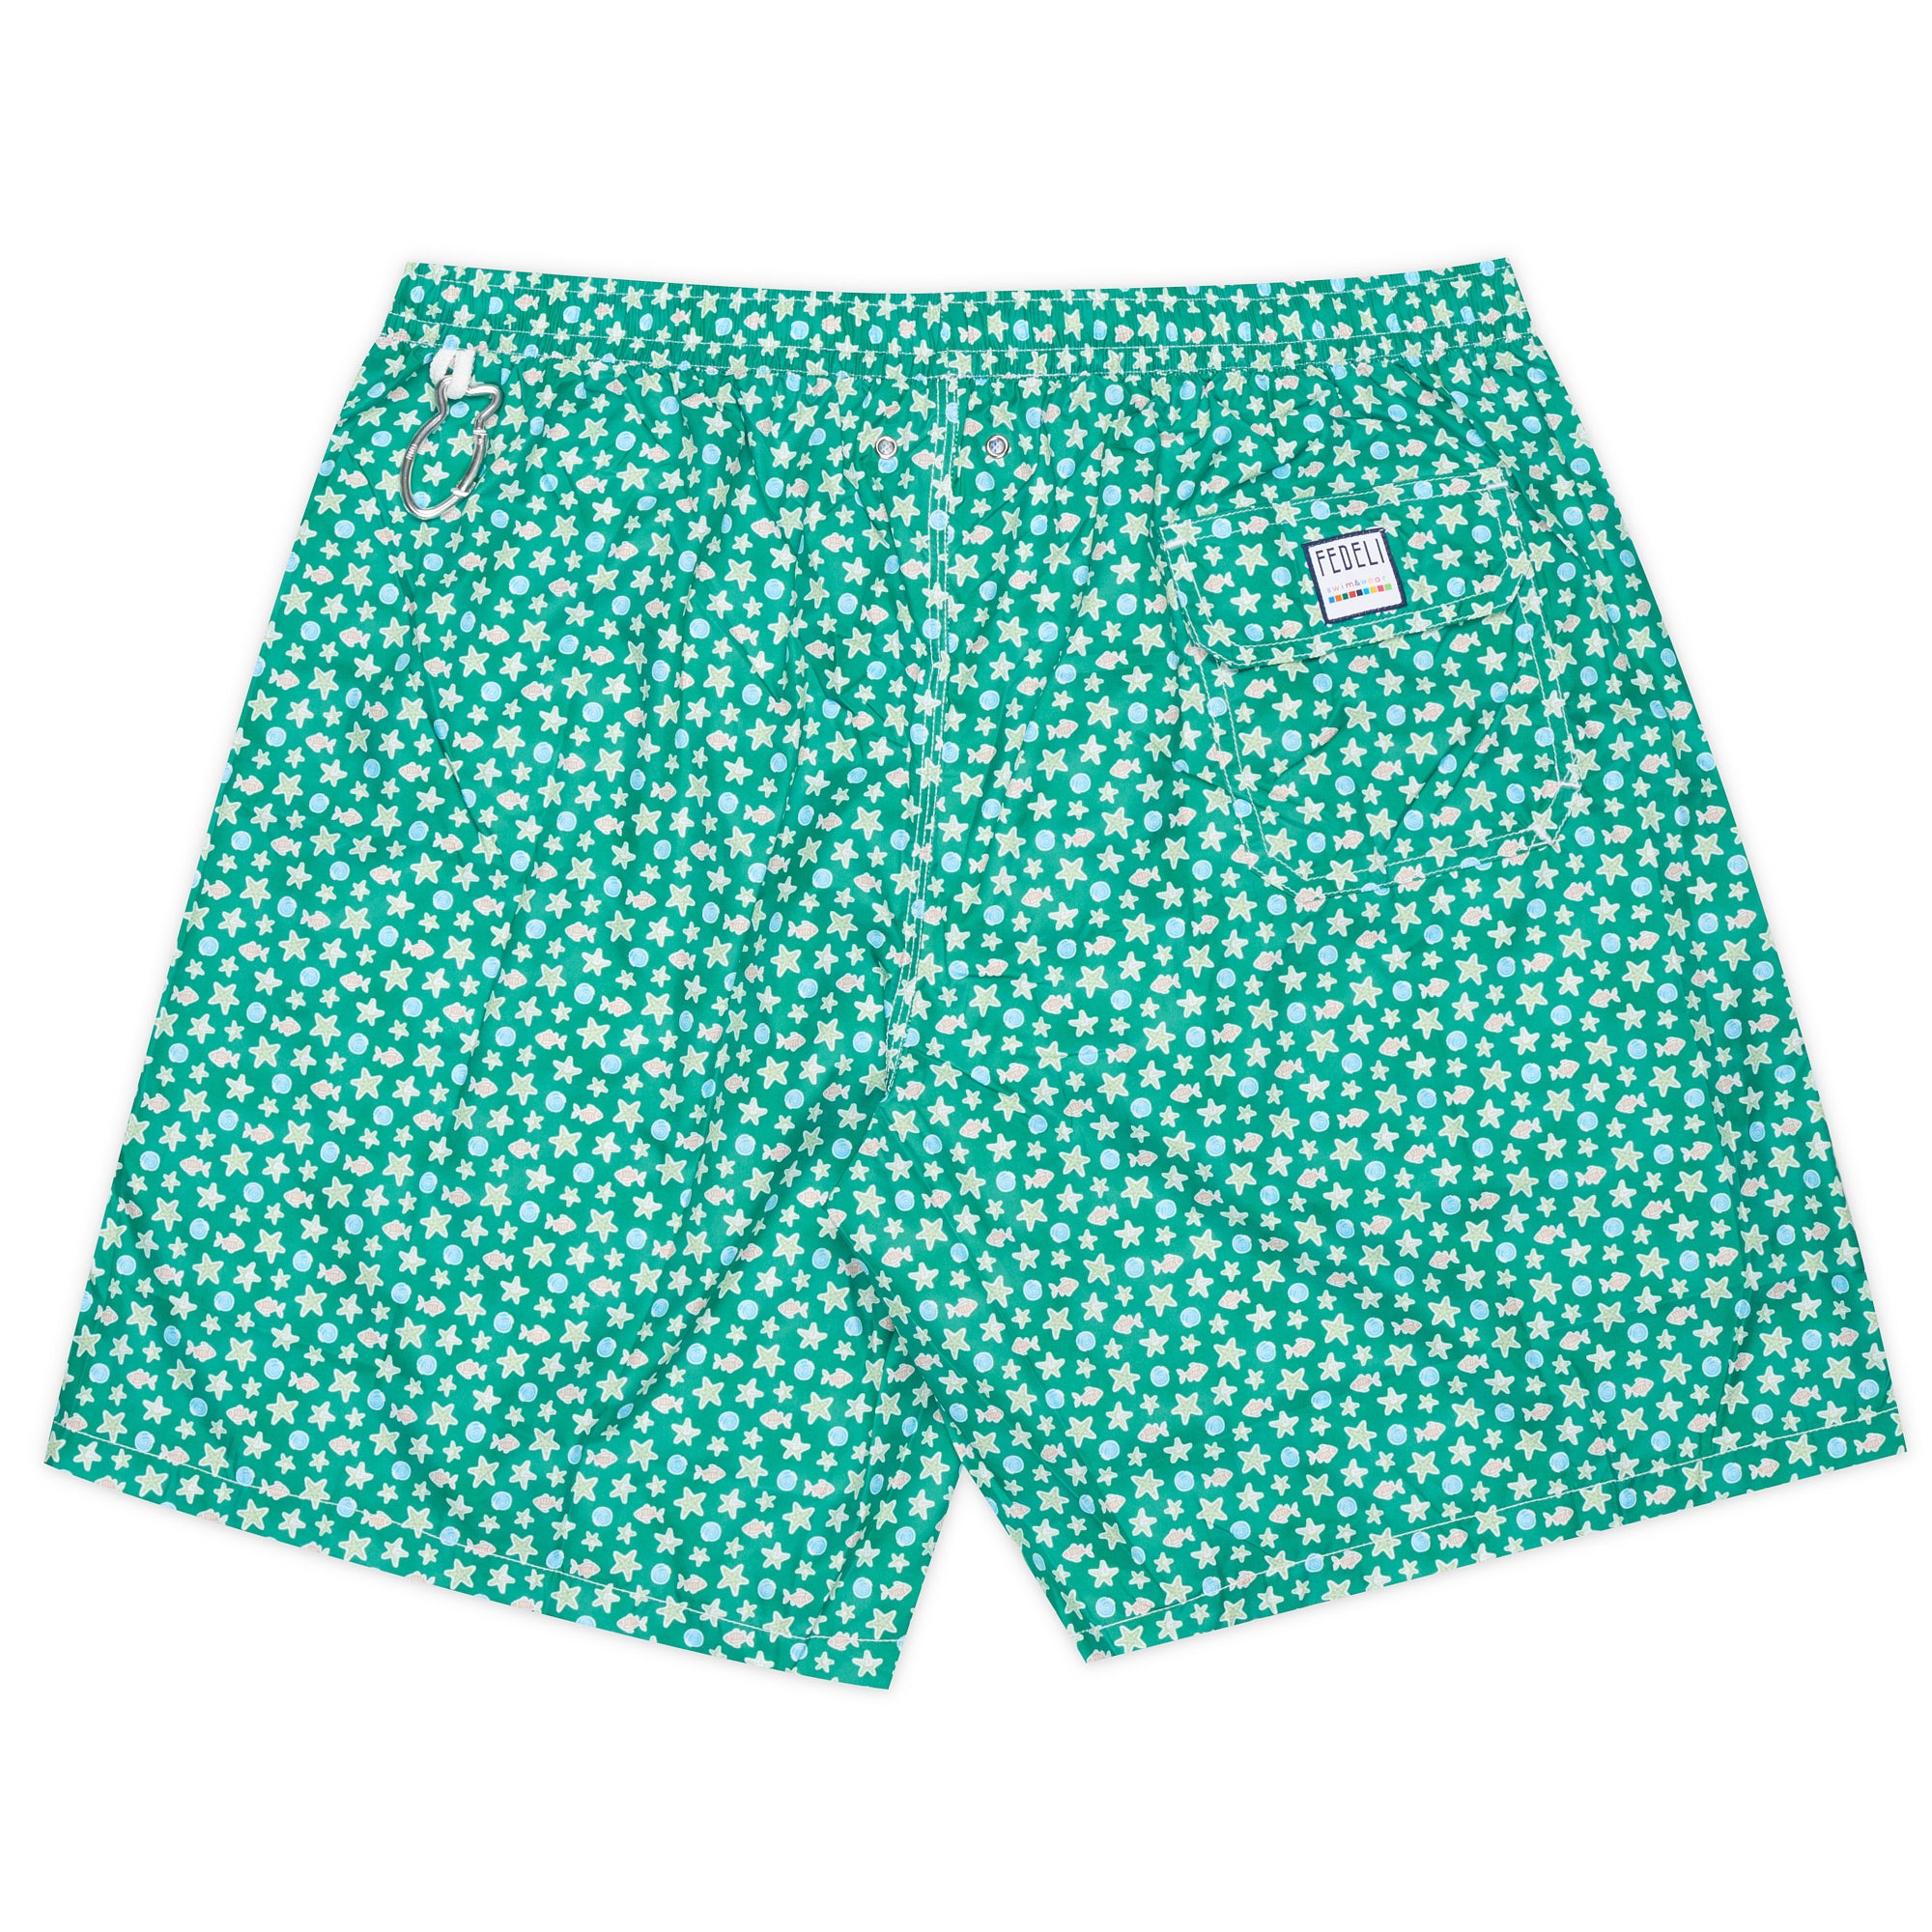 FEDELI Green Sea Animal Print Positano Airstop Swim Shorts Trunks 40/41 NEW XXXL